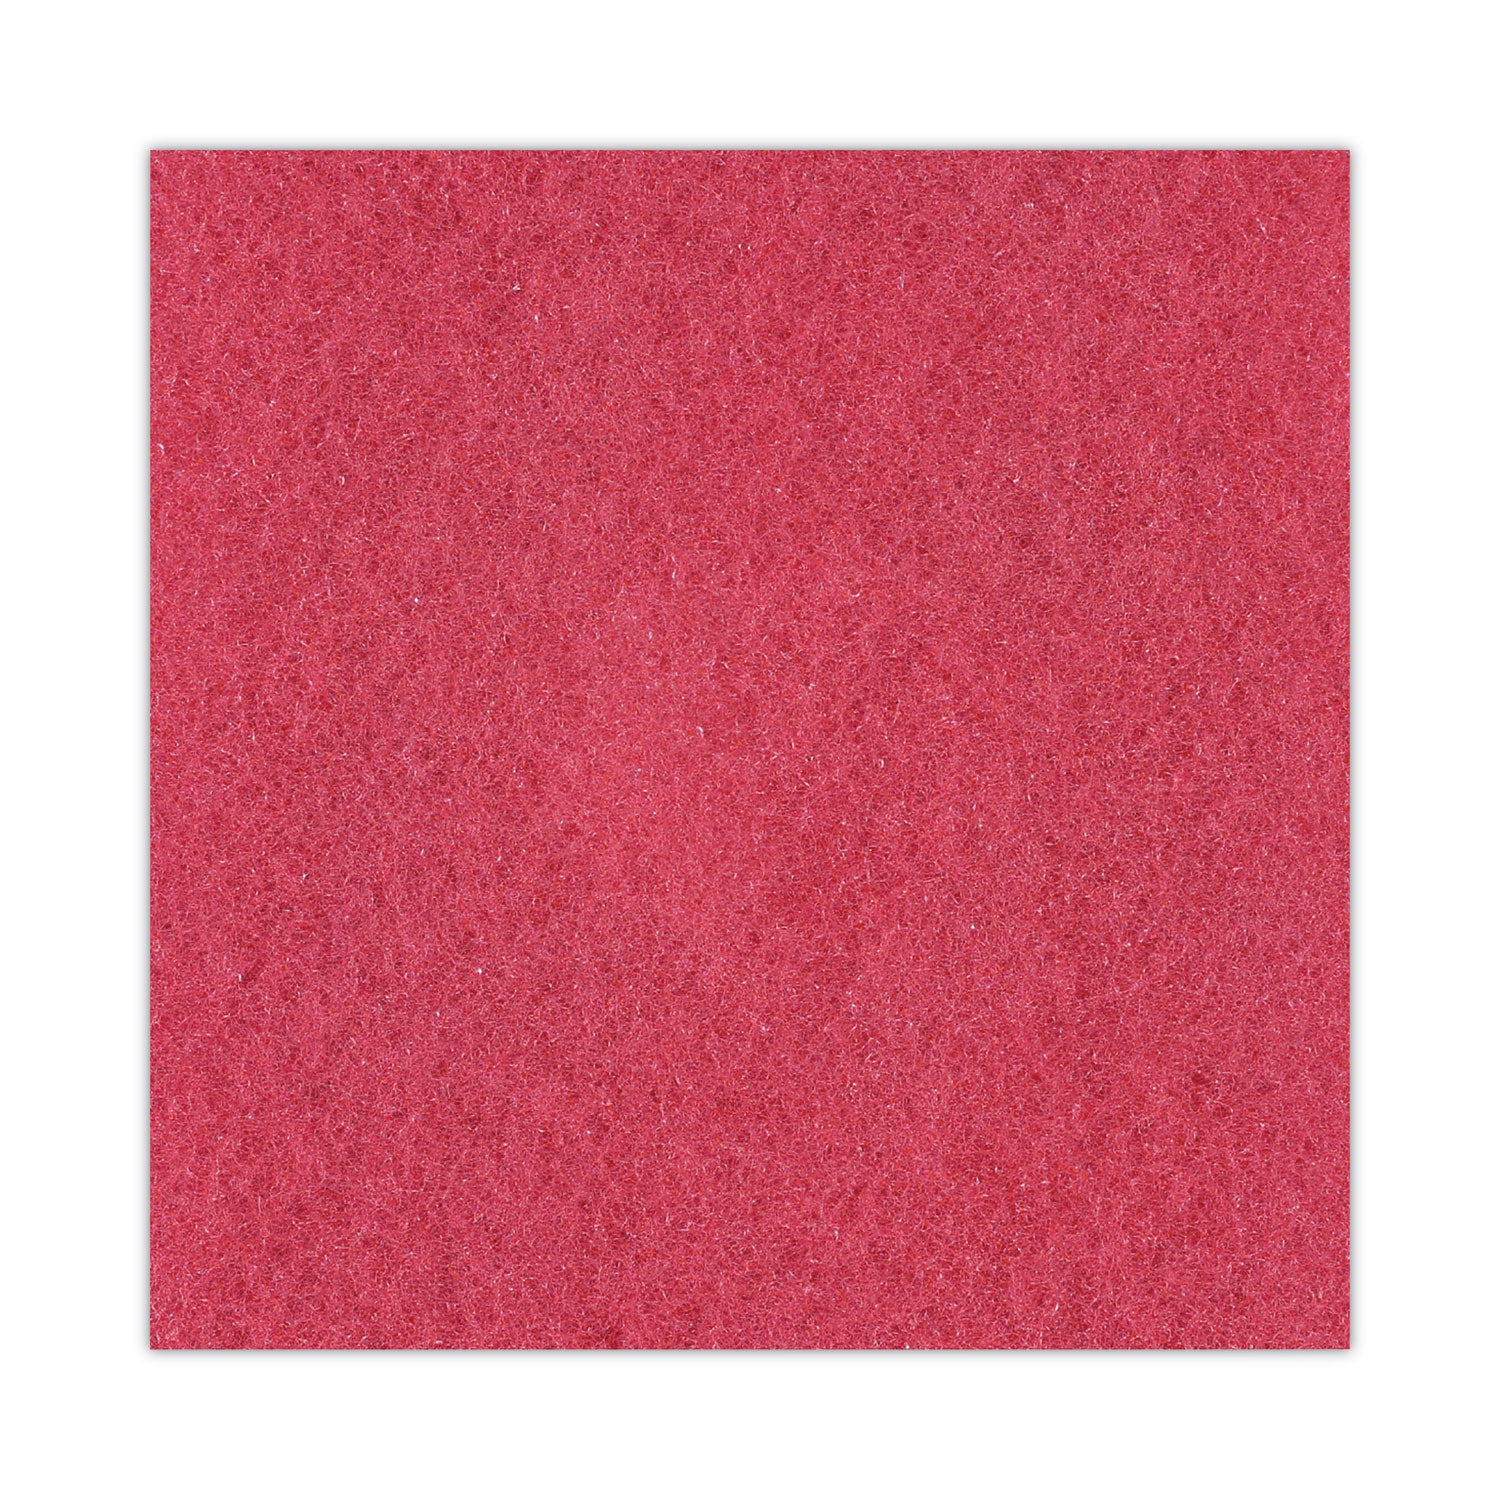 Buffing Floor Pads, 20" Diameter, Red, 5/Carton - 